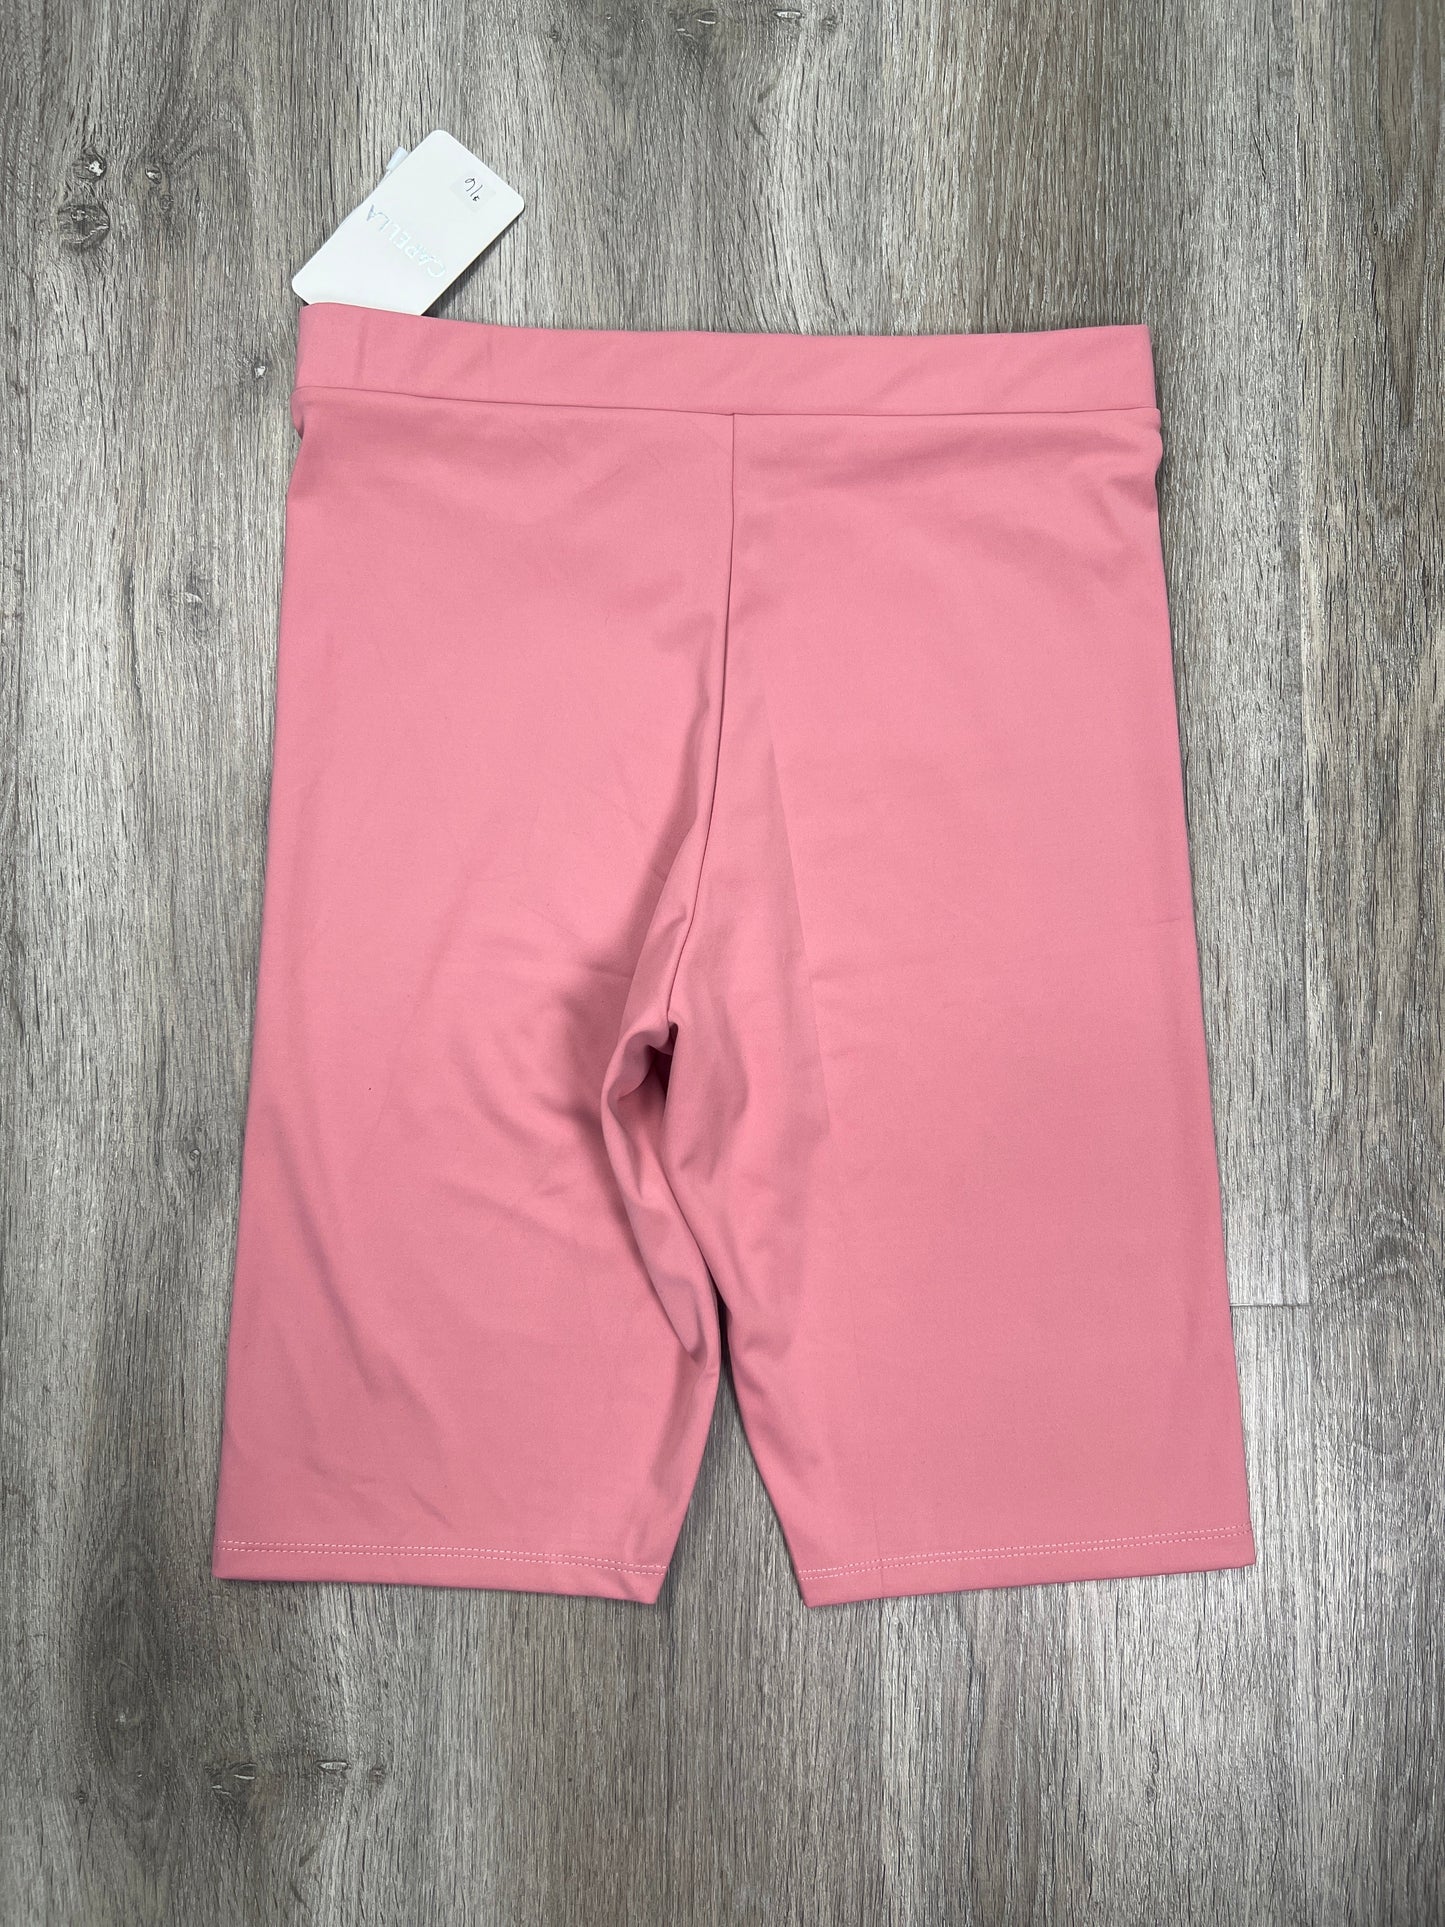 Pink Athletic Shorts Capella Apparel, Size L